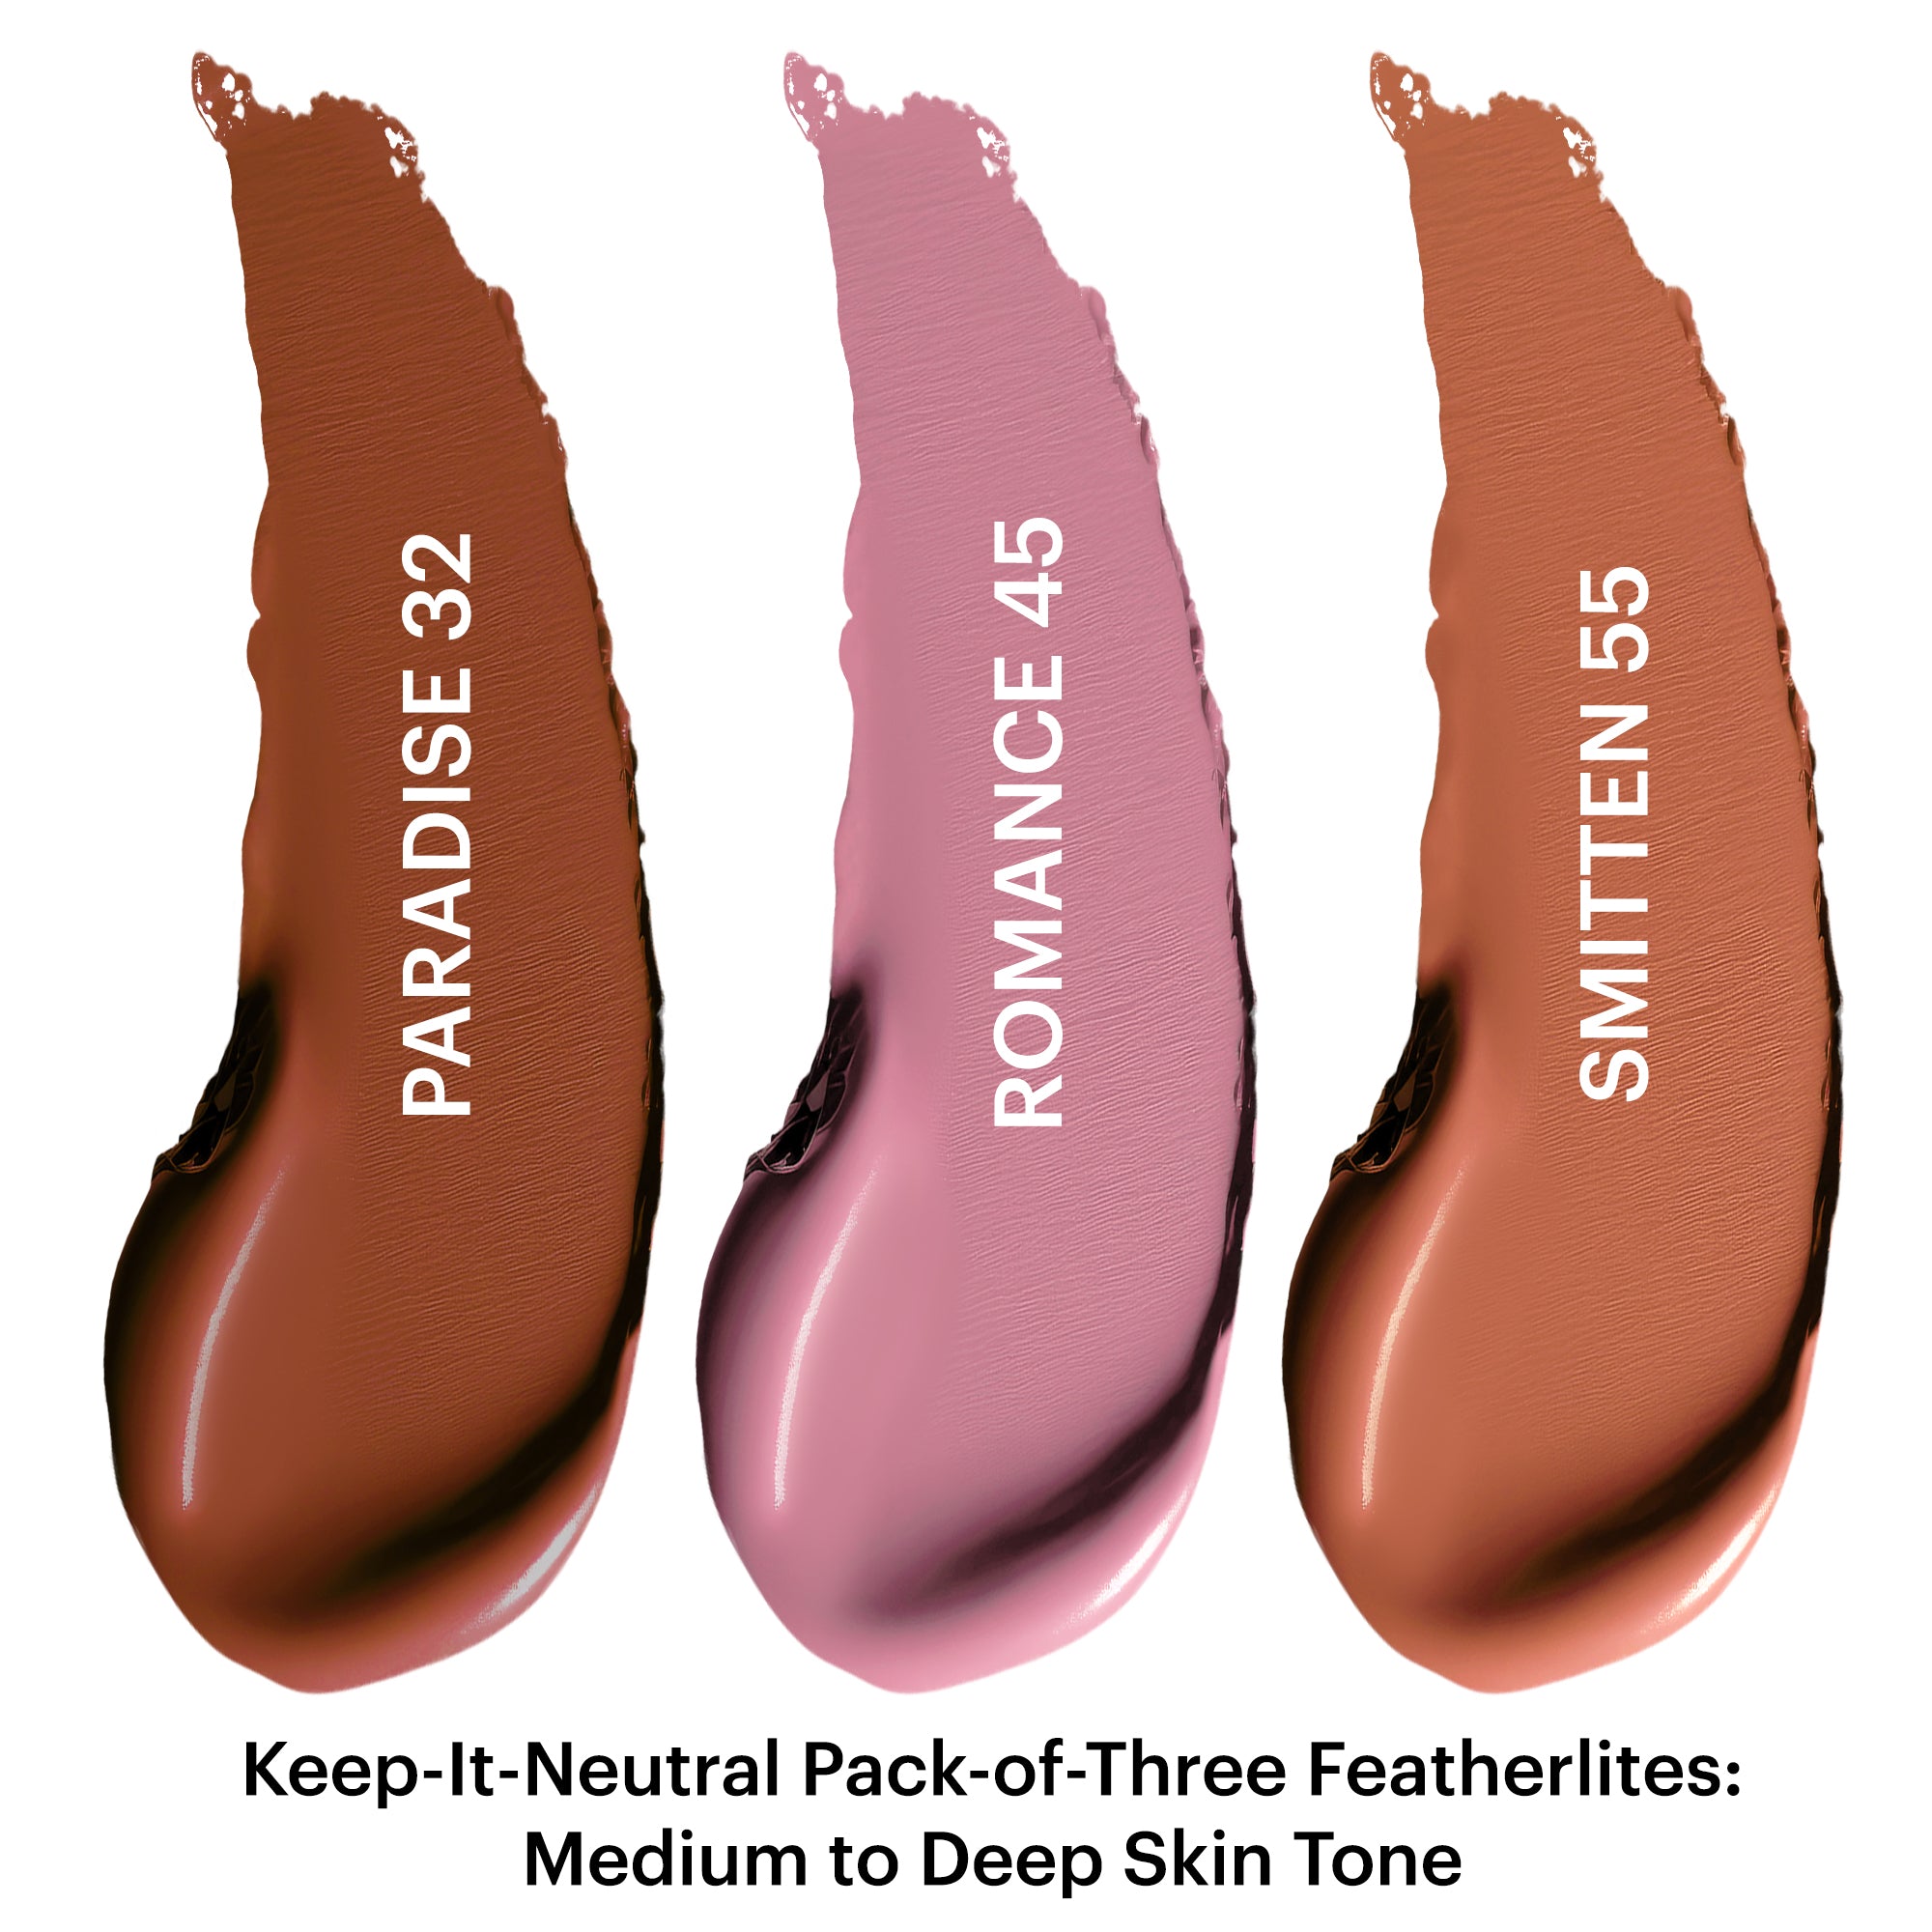 Keep-It-Neutral Pack-of-Three Featherlites: Medium to Deep Skin Tone